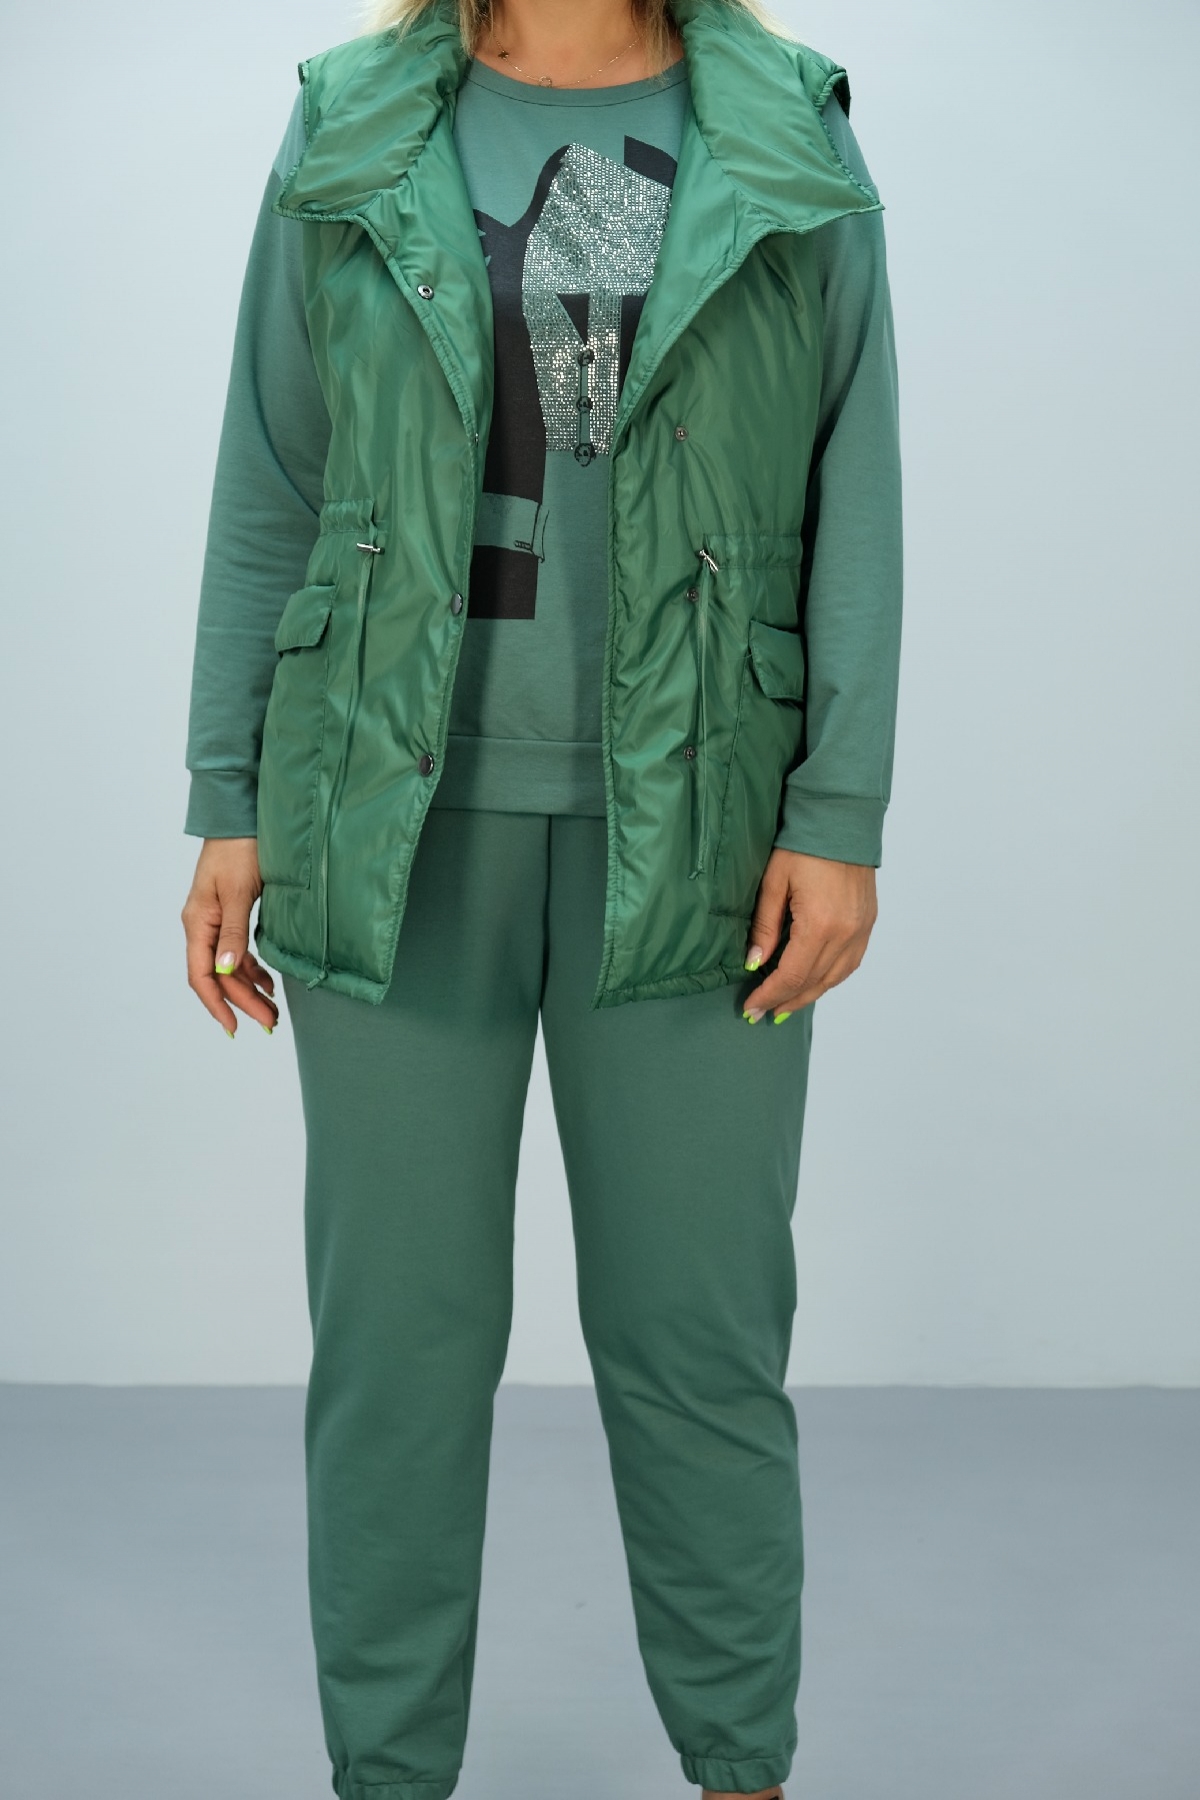 Women's 3 Piece Suits-Green